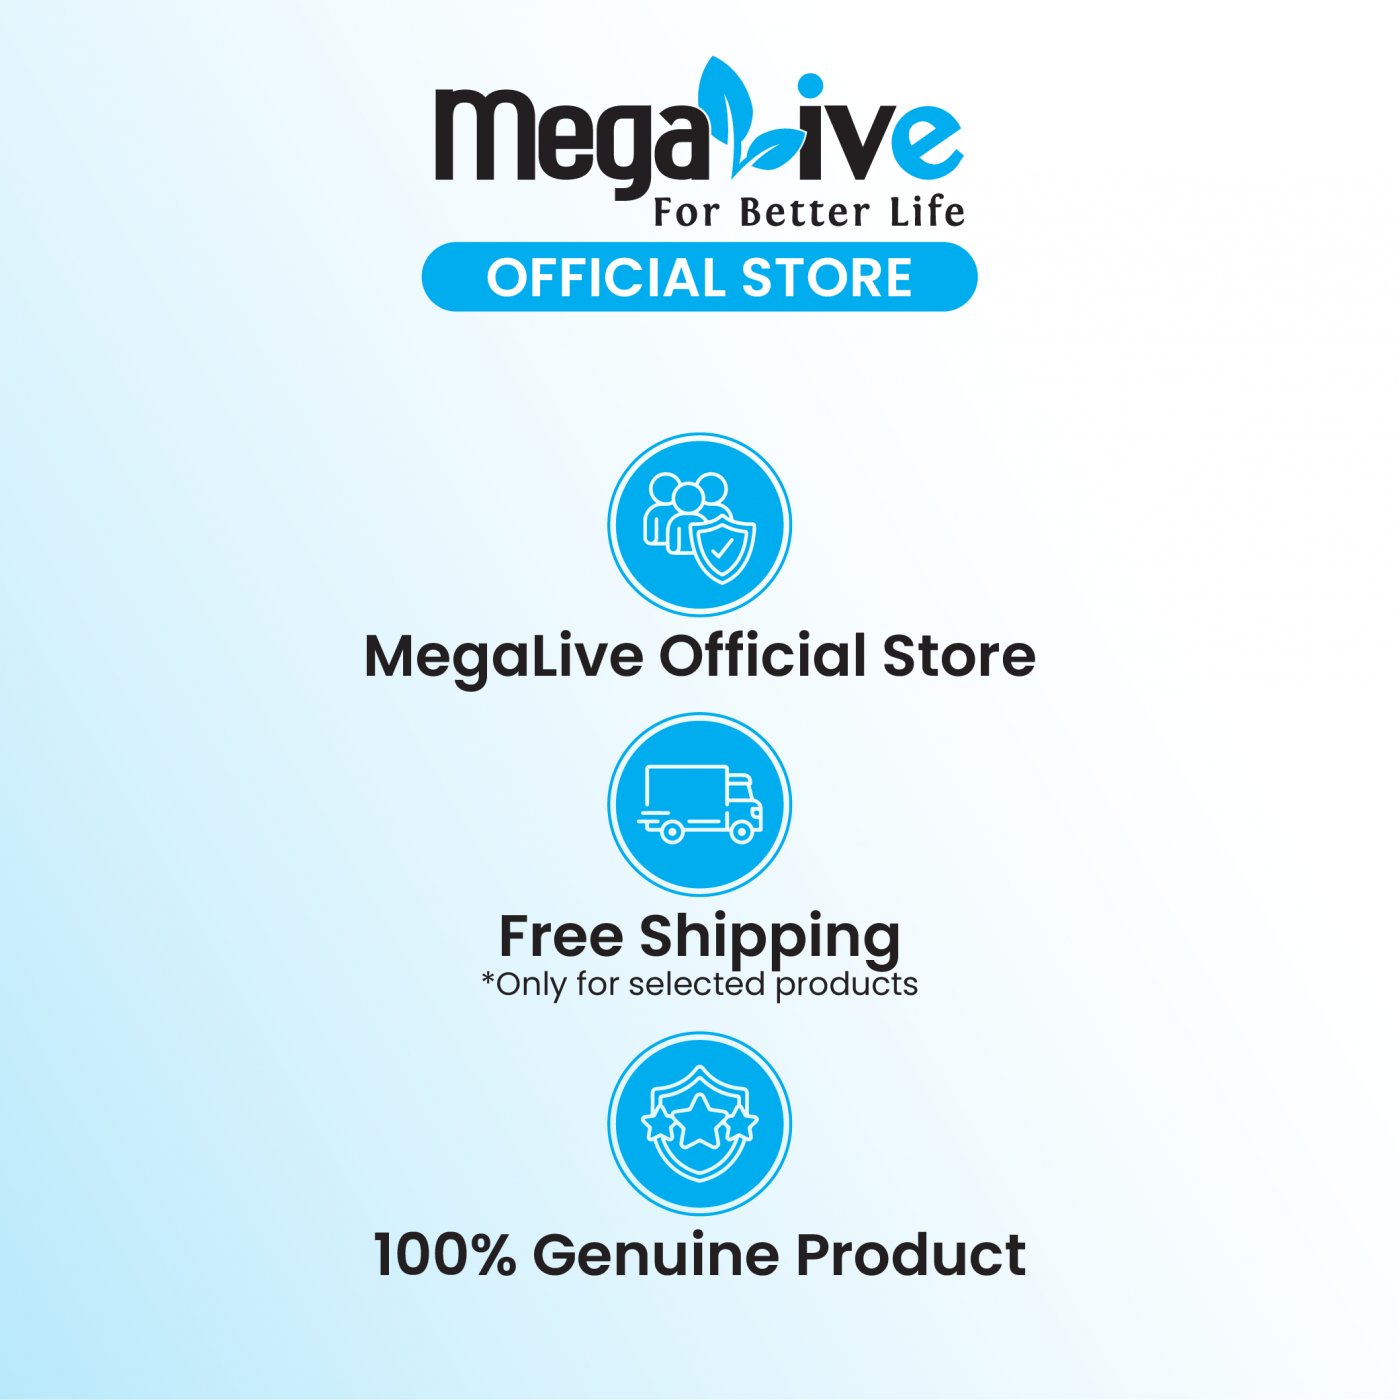 MegaLive Lavie® Sheep Placenta + Fish Collagen